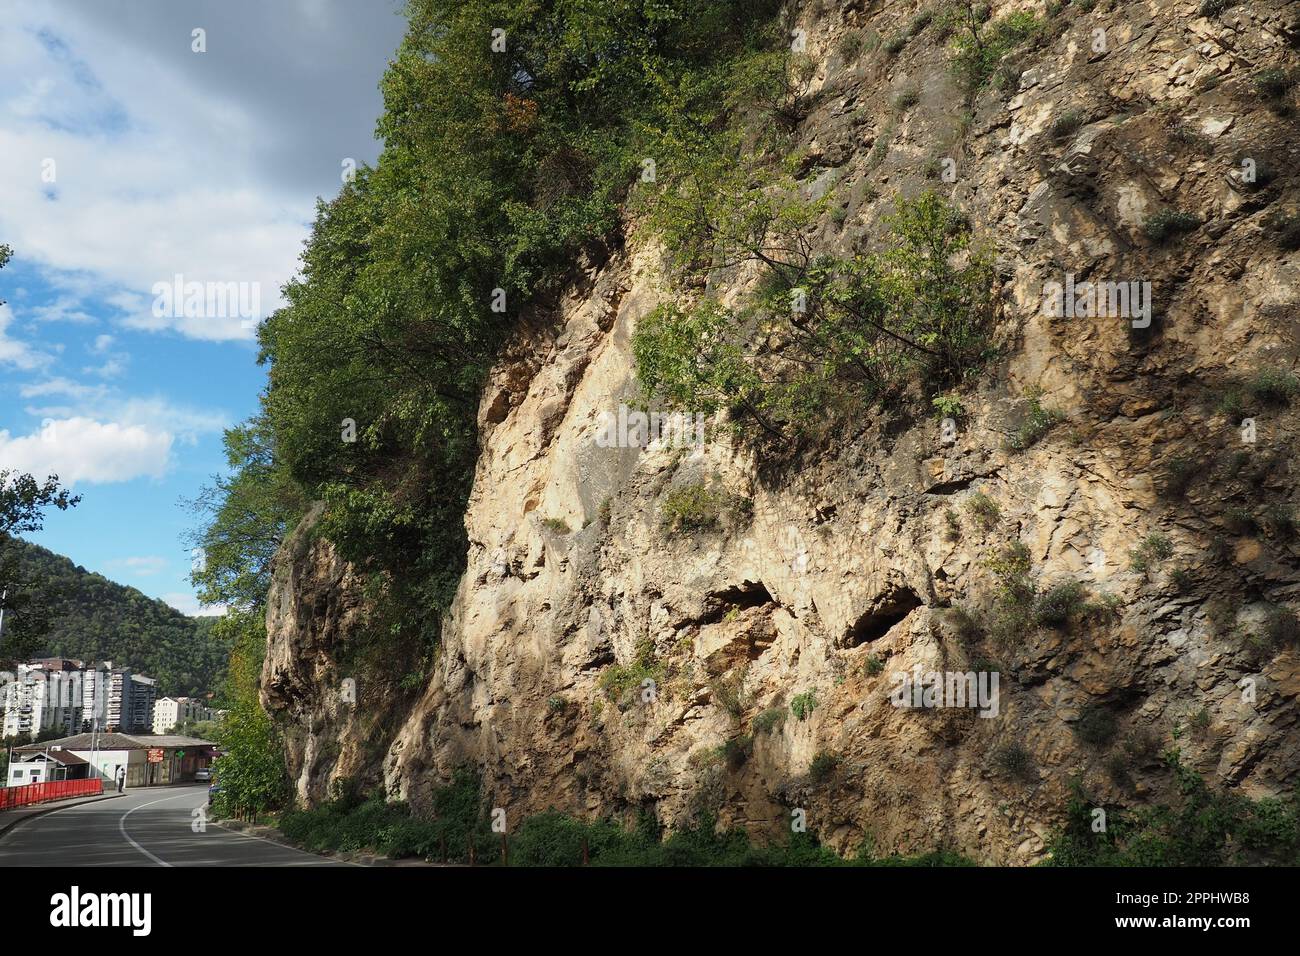 Mountain range in Mali Zvornik, Serbia, September 29, 2022 Brasina antimony deposit, Guchevo. Rocks overhanging the road Stock Photo